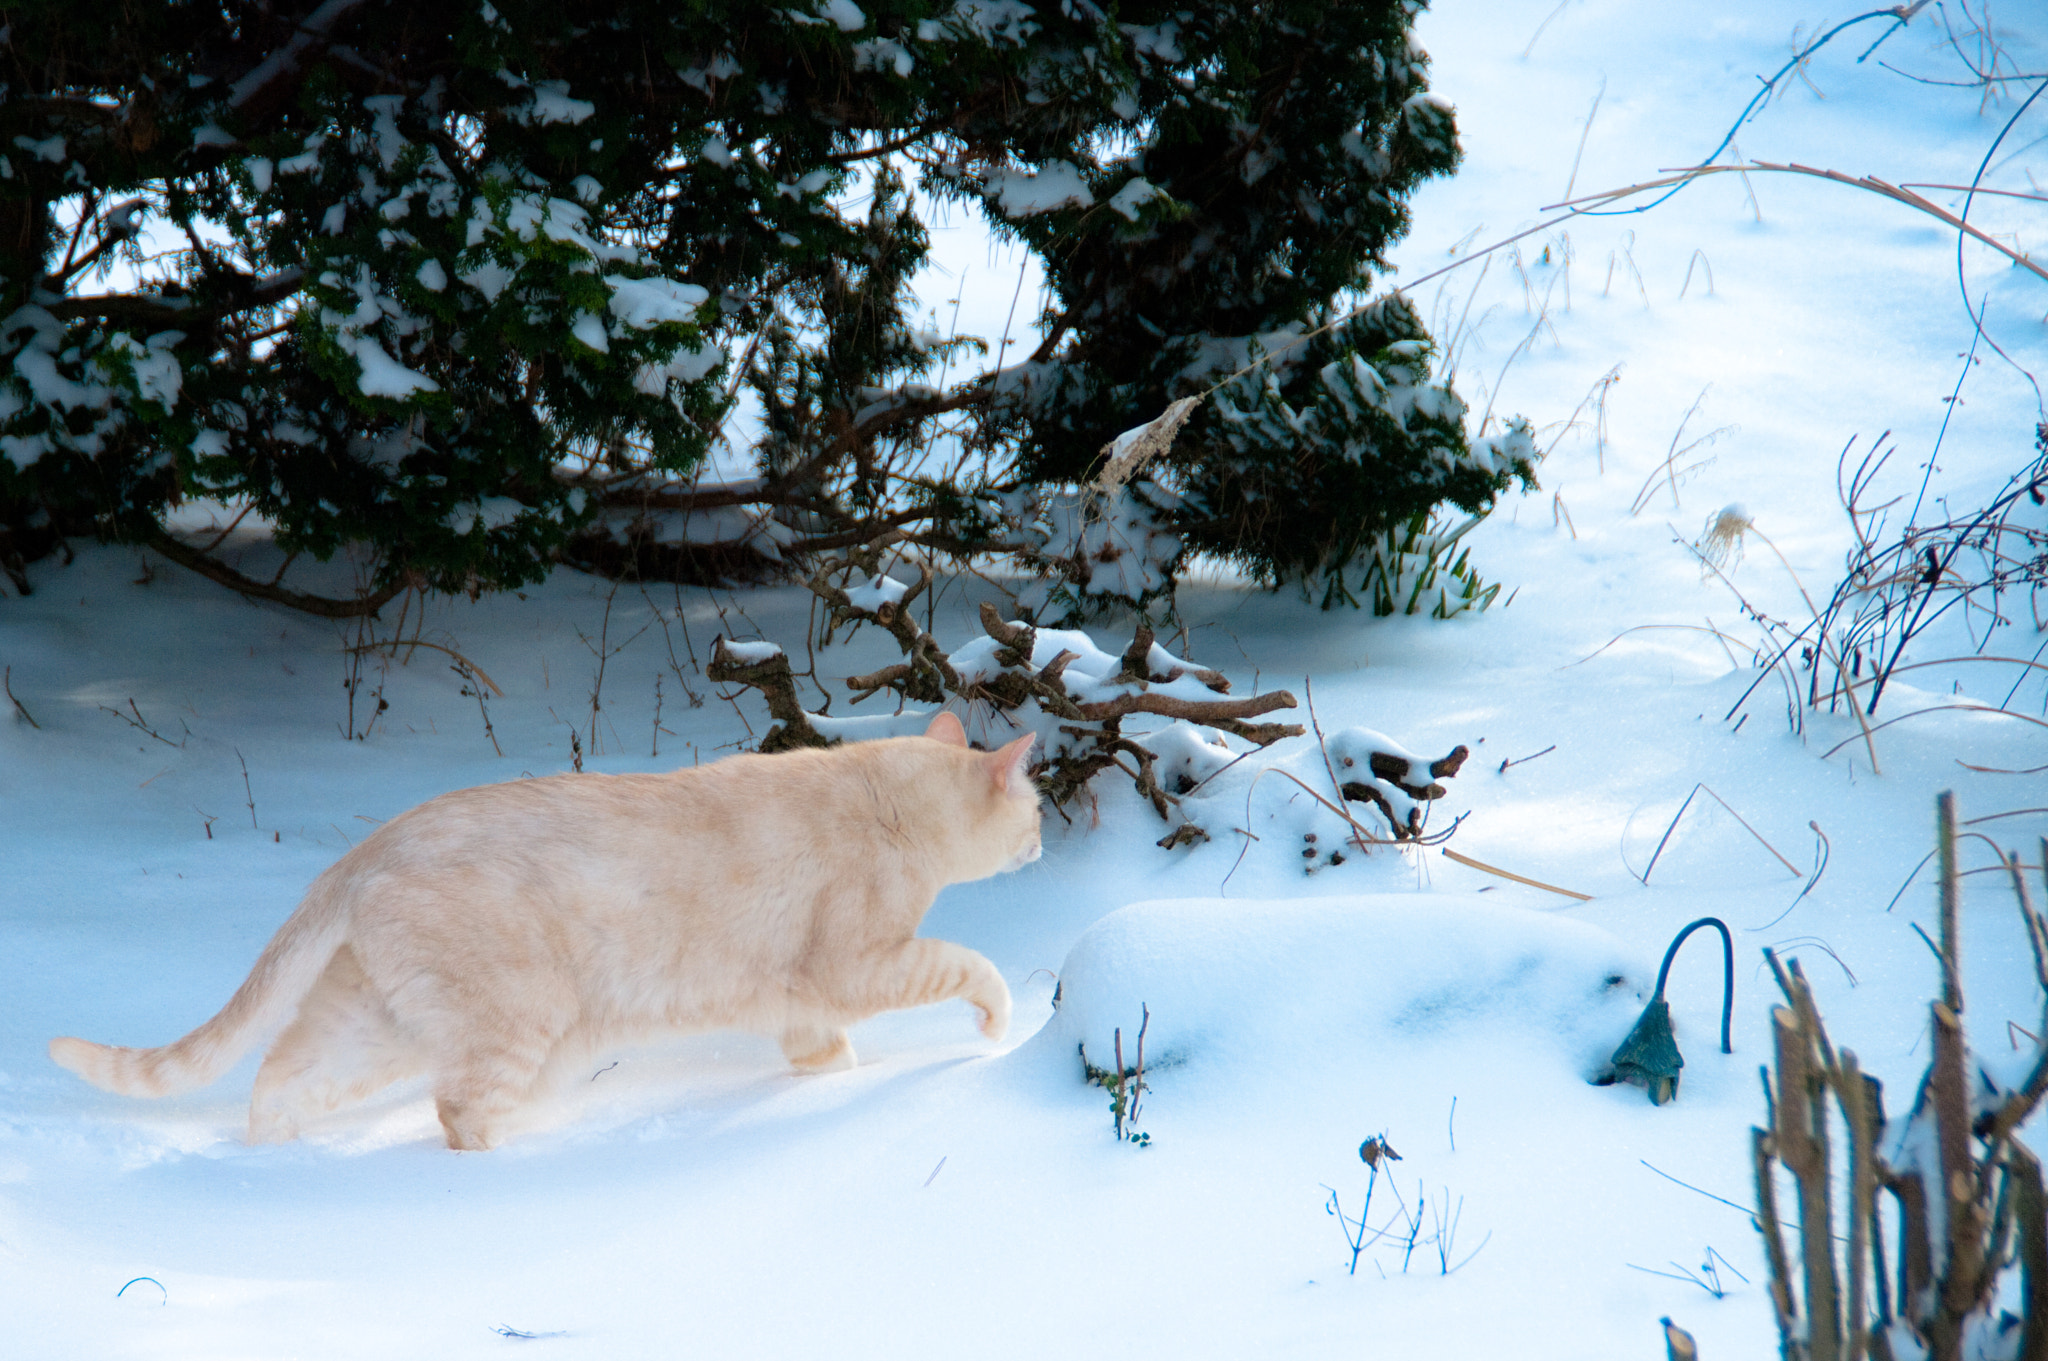 Pentax K20D sample photo. O'malley's journey through the snowy backyard photography